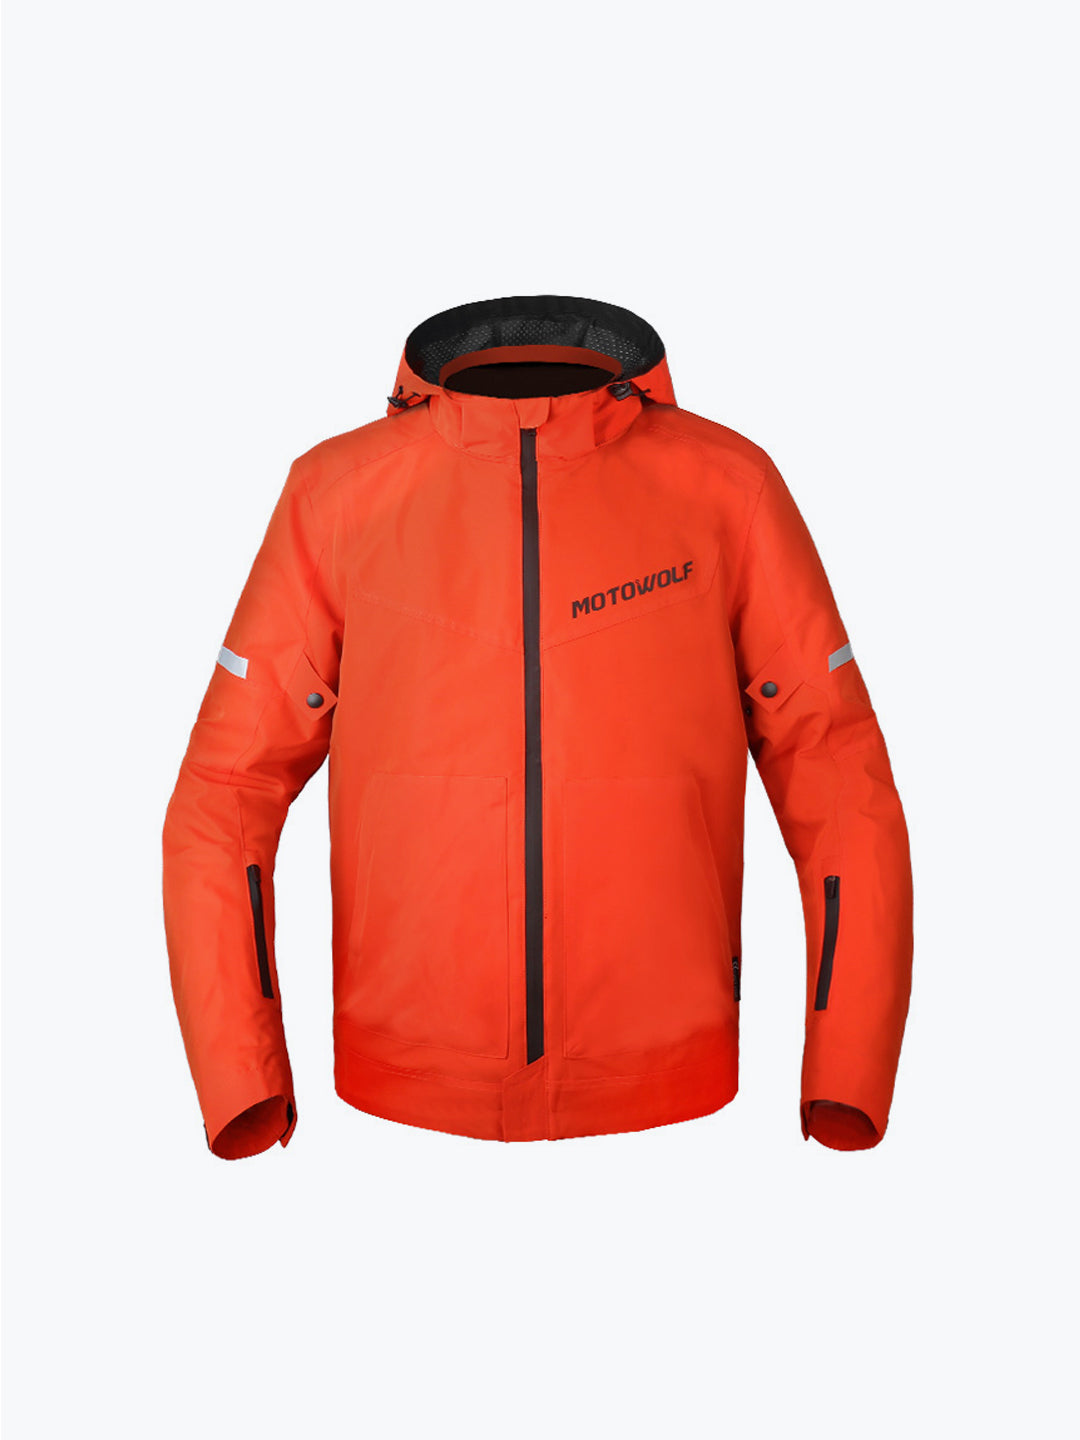 Motowolf Jacket Orange 0520